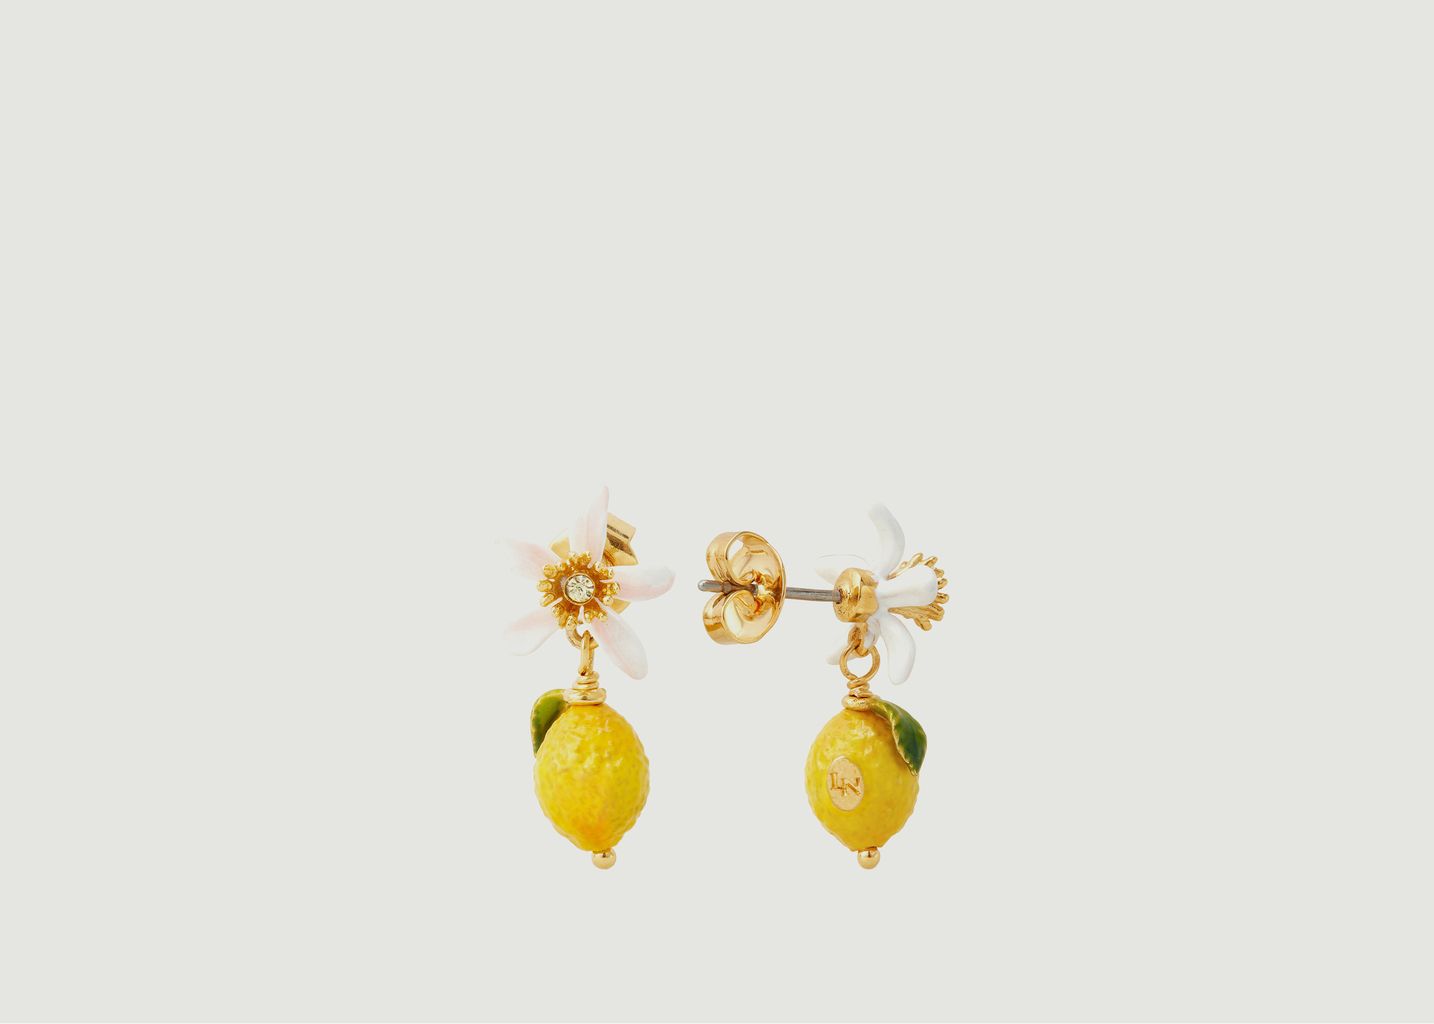 Lemon and lemon flower earrings - Les Néréides